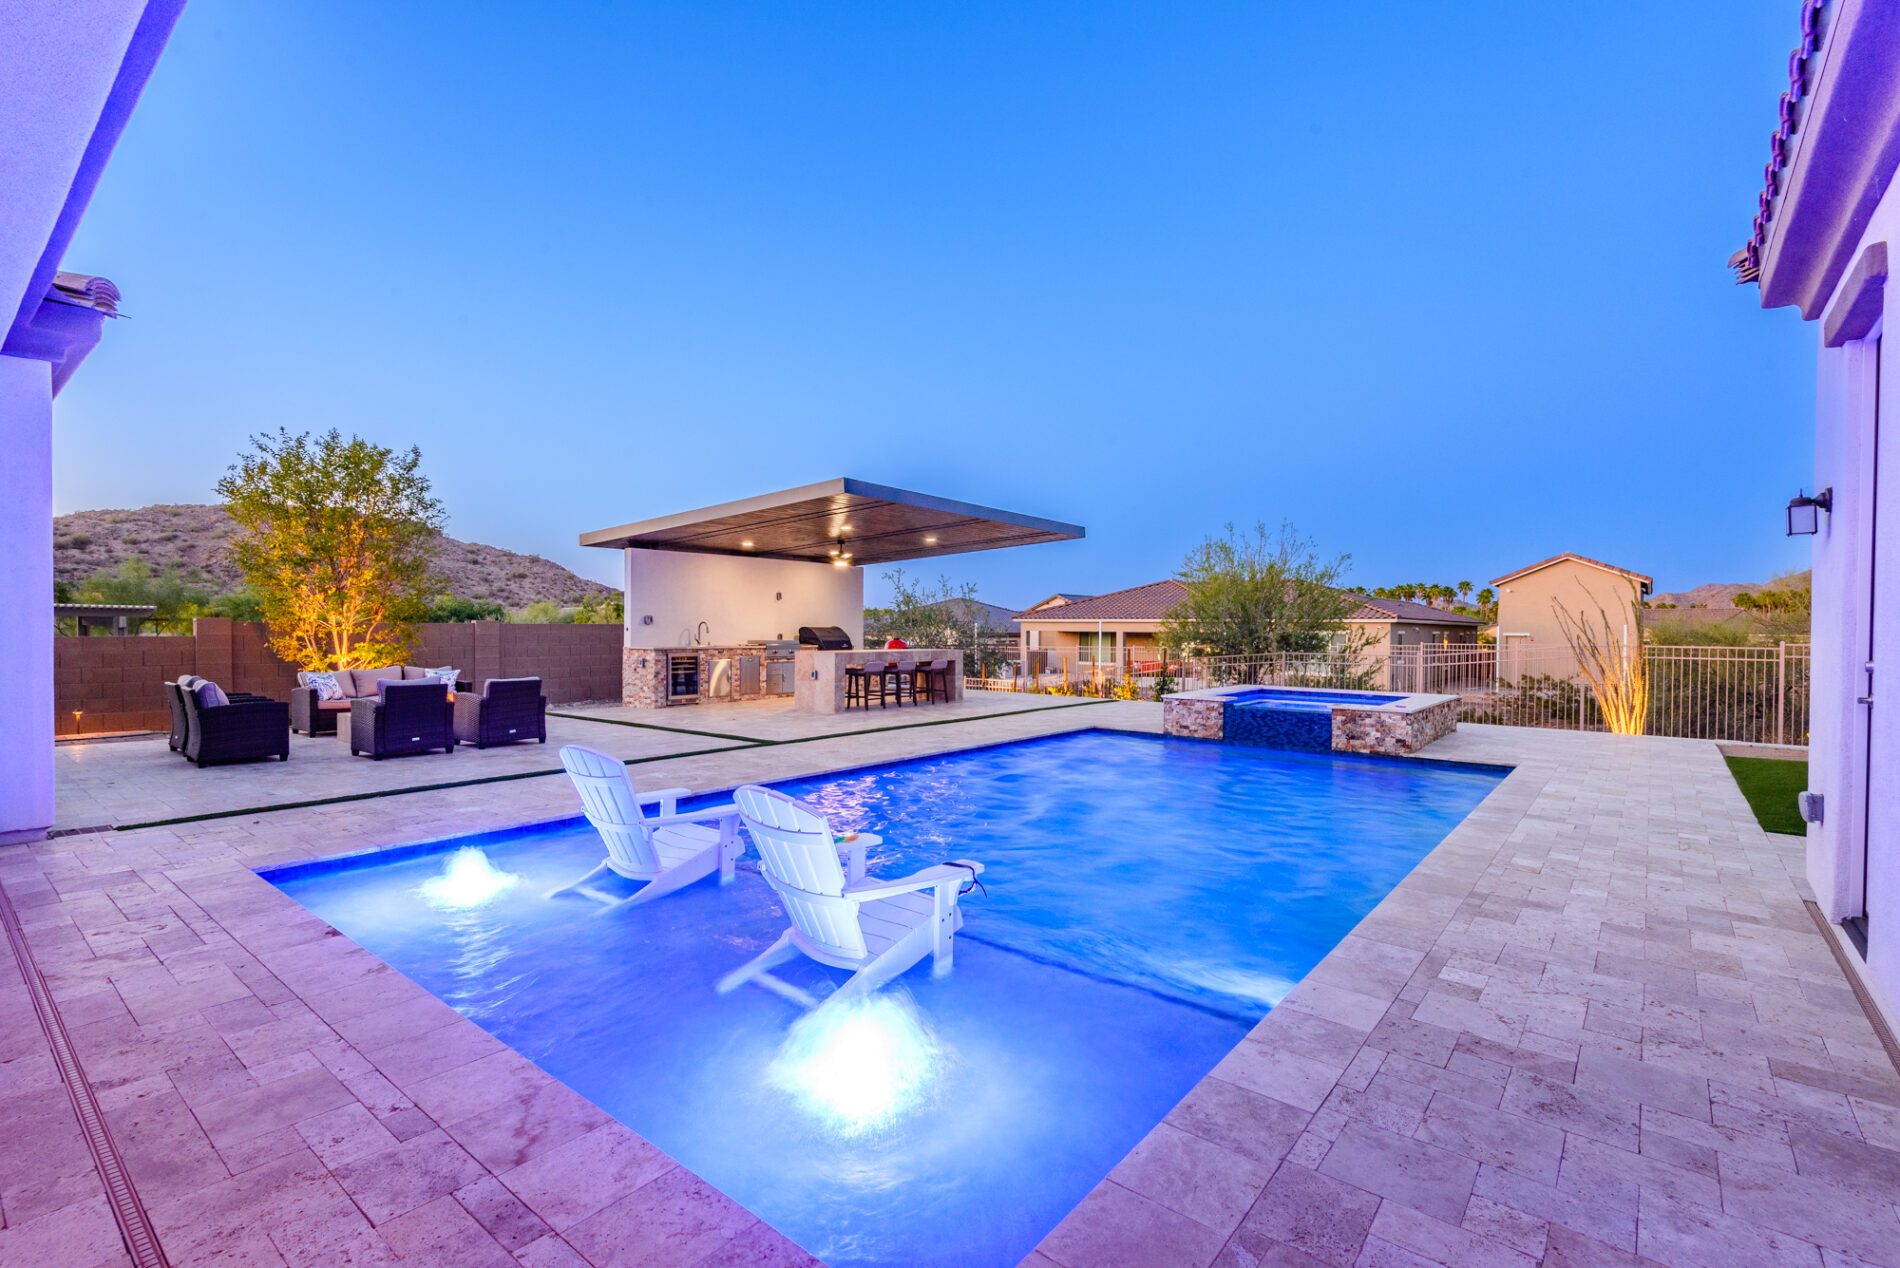 Arizona Pool Design